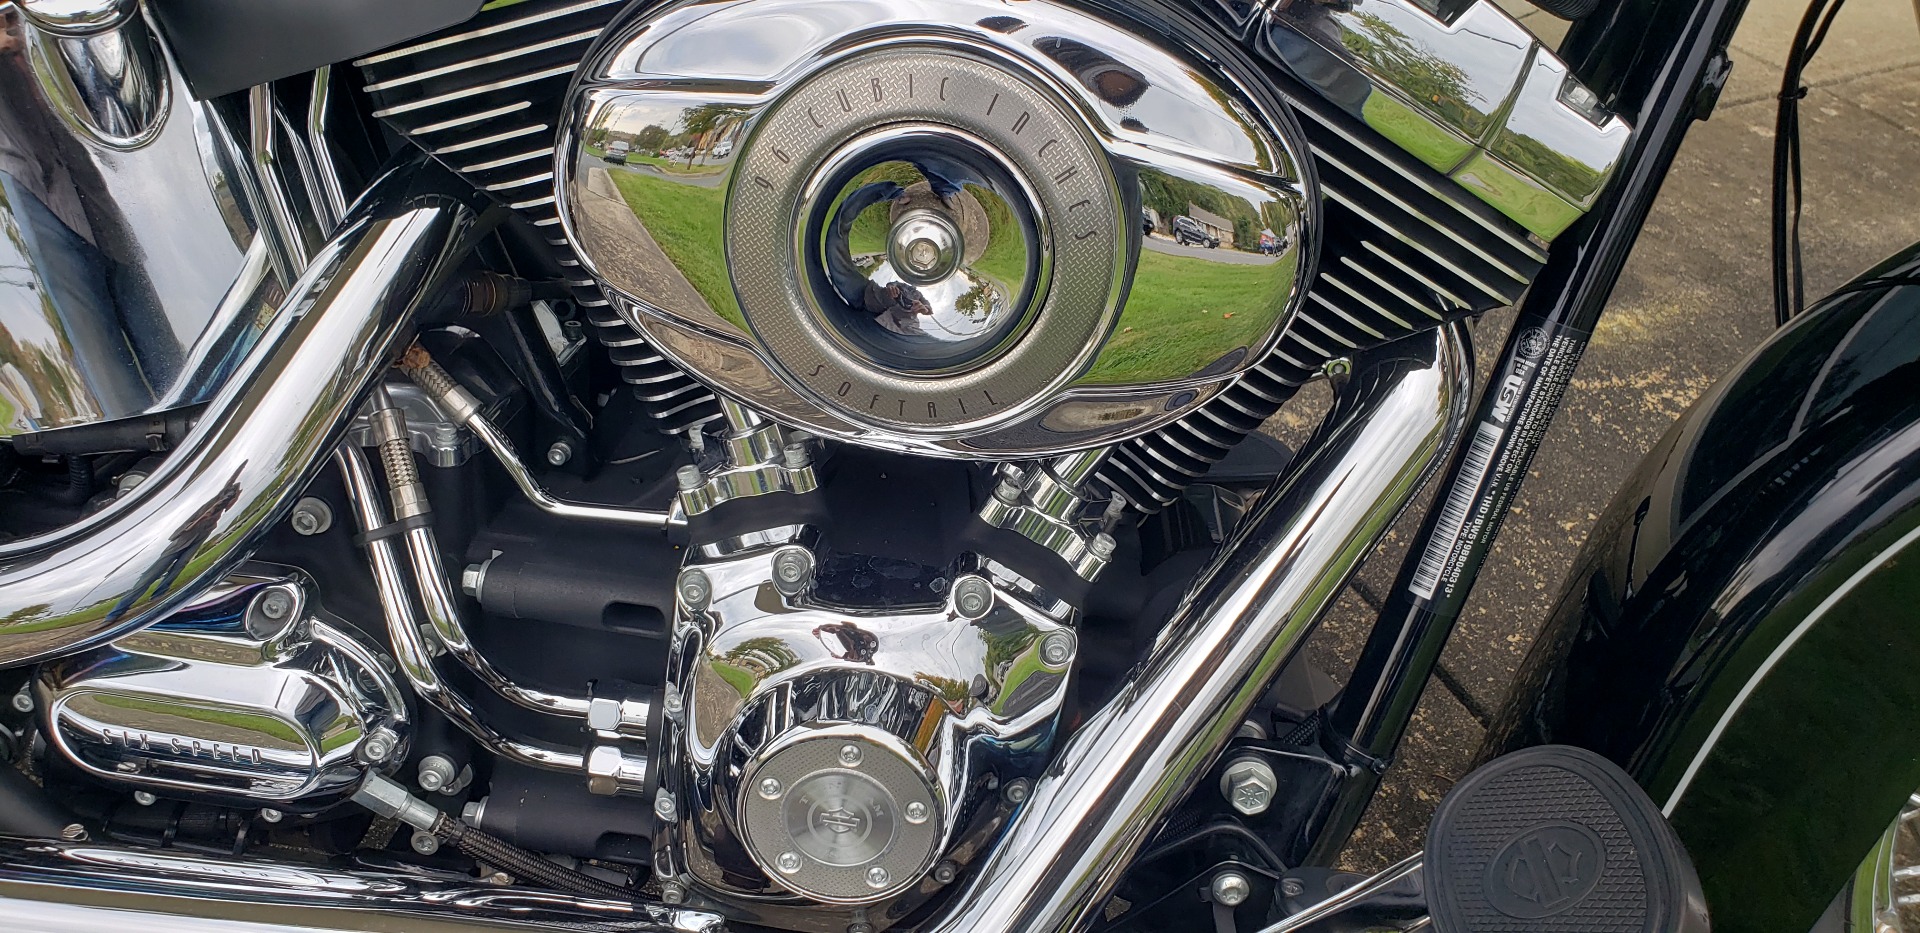 2011 Harley-Davidson Heritage Softail® Classic in Dumfries, Virginia - Photo 2